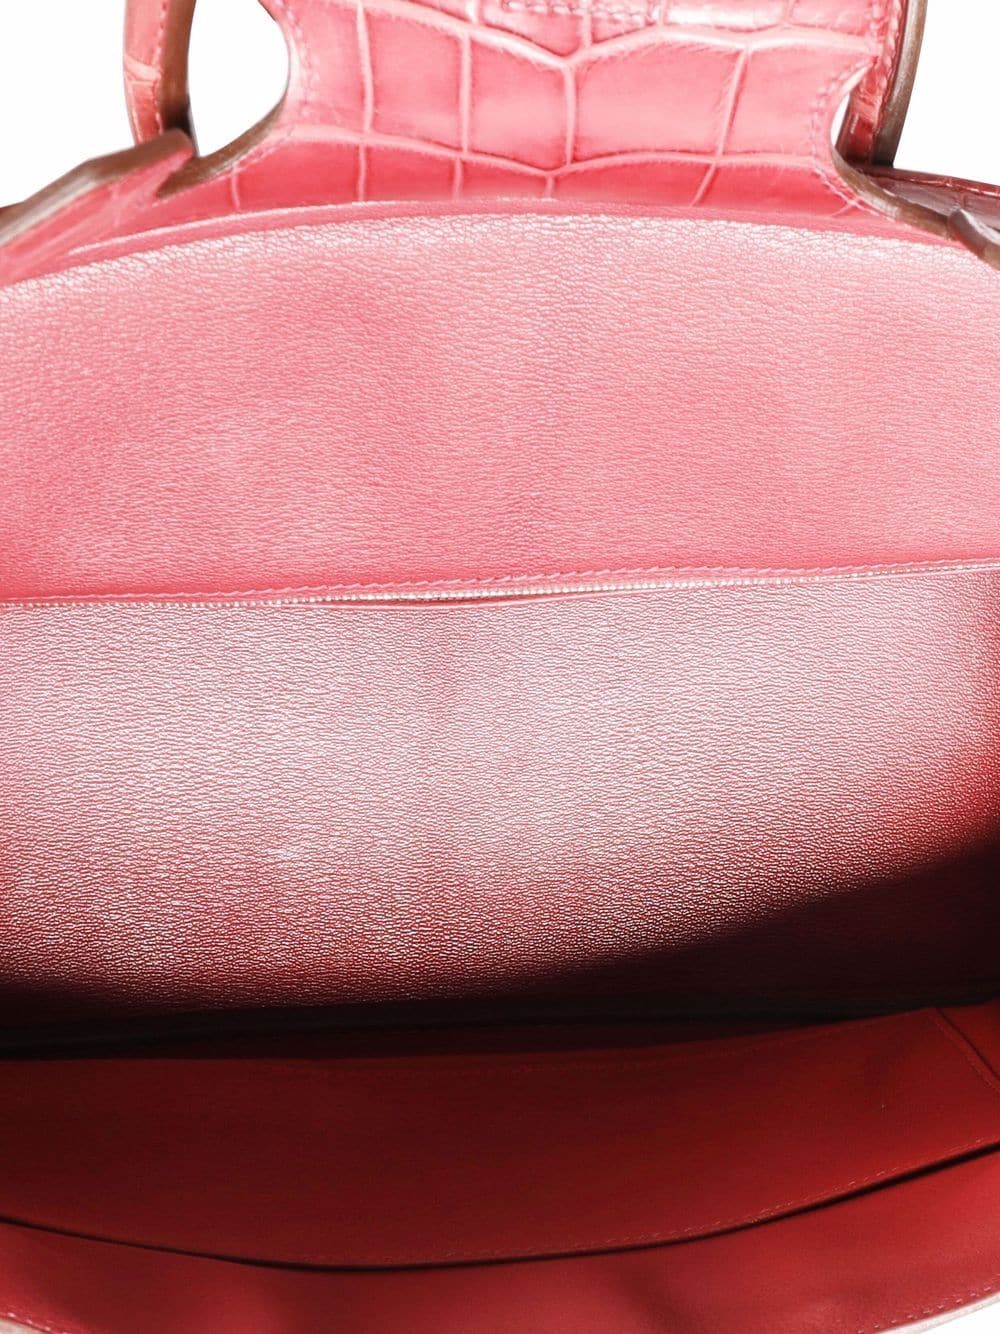 Hermès 2005 35cm Birkin Bag - Farfetch